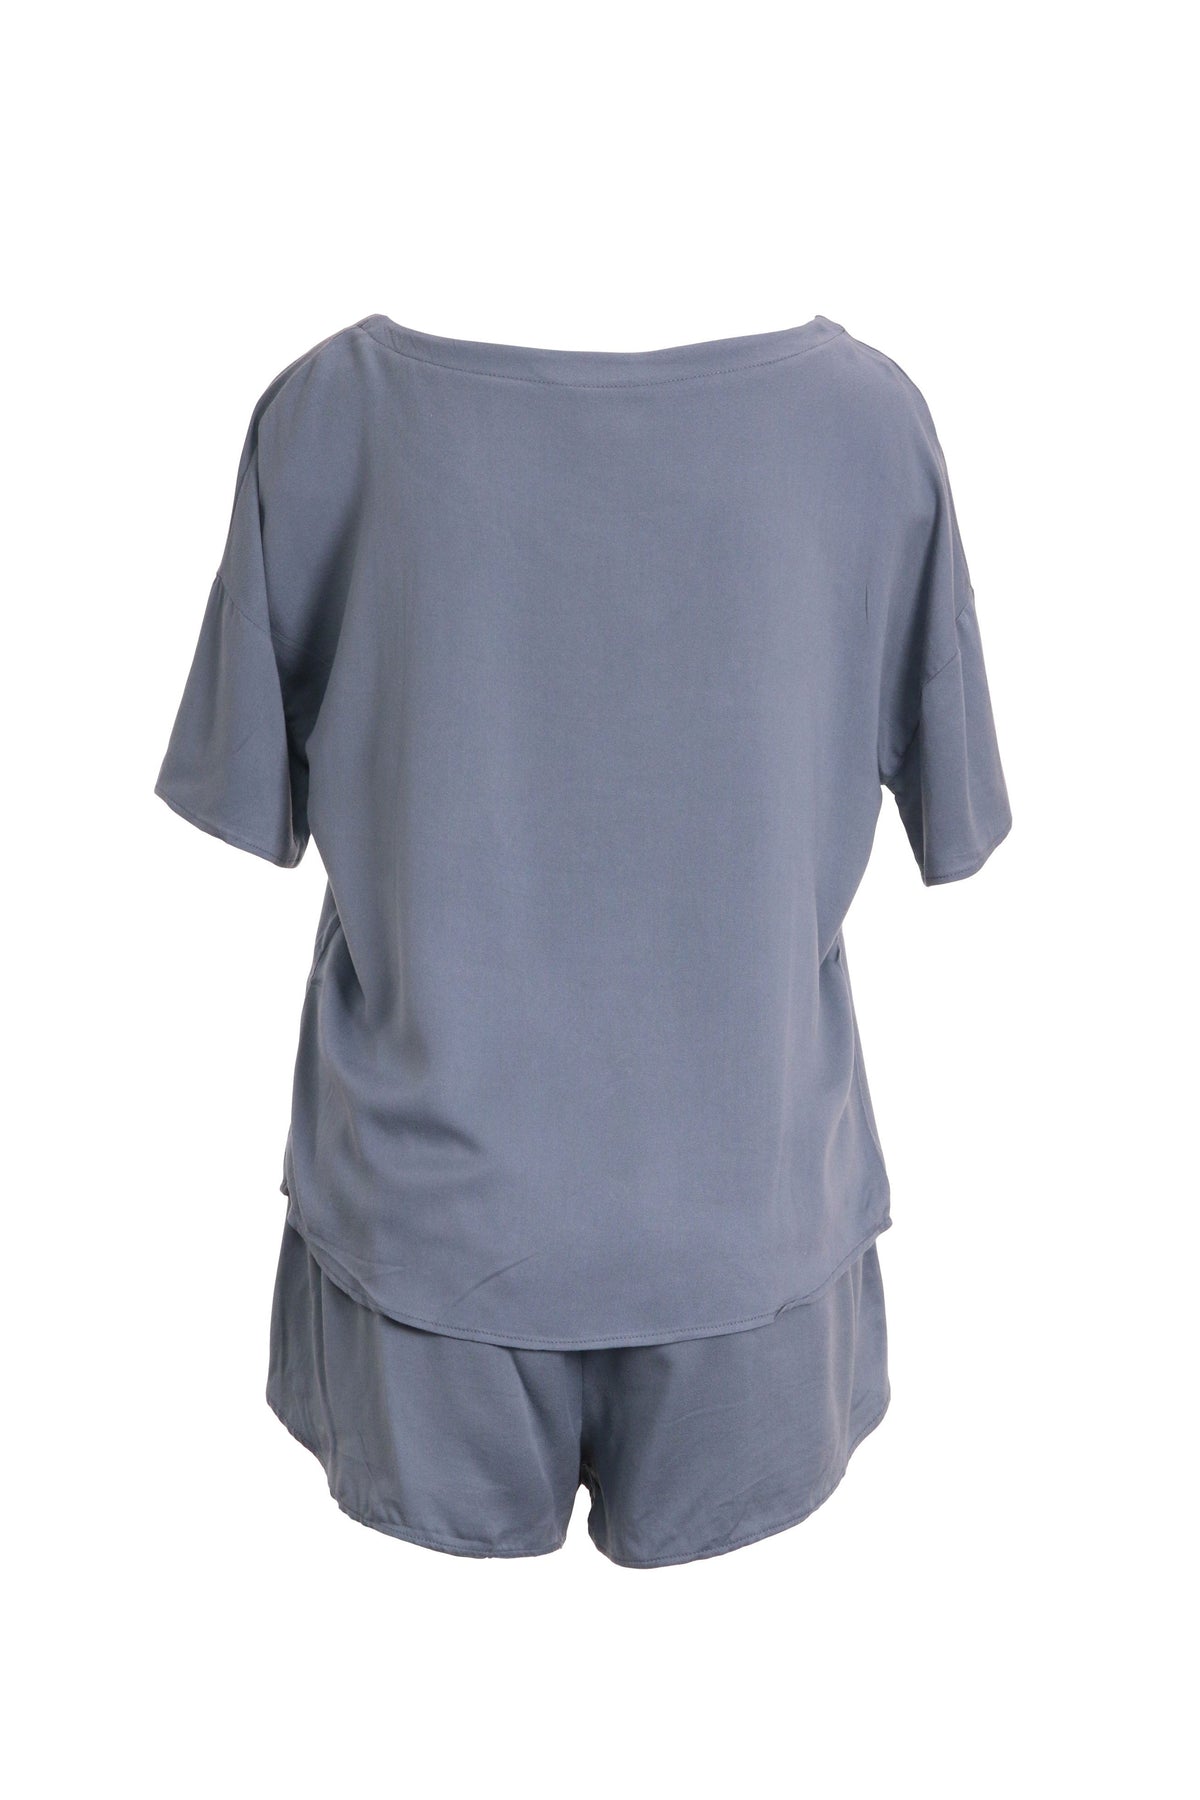 iCollection Pajama Set Plus Size Esme PJ Set- Blue